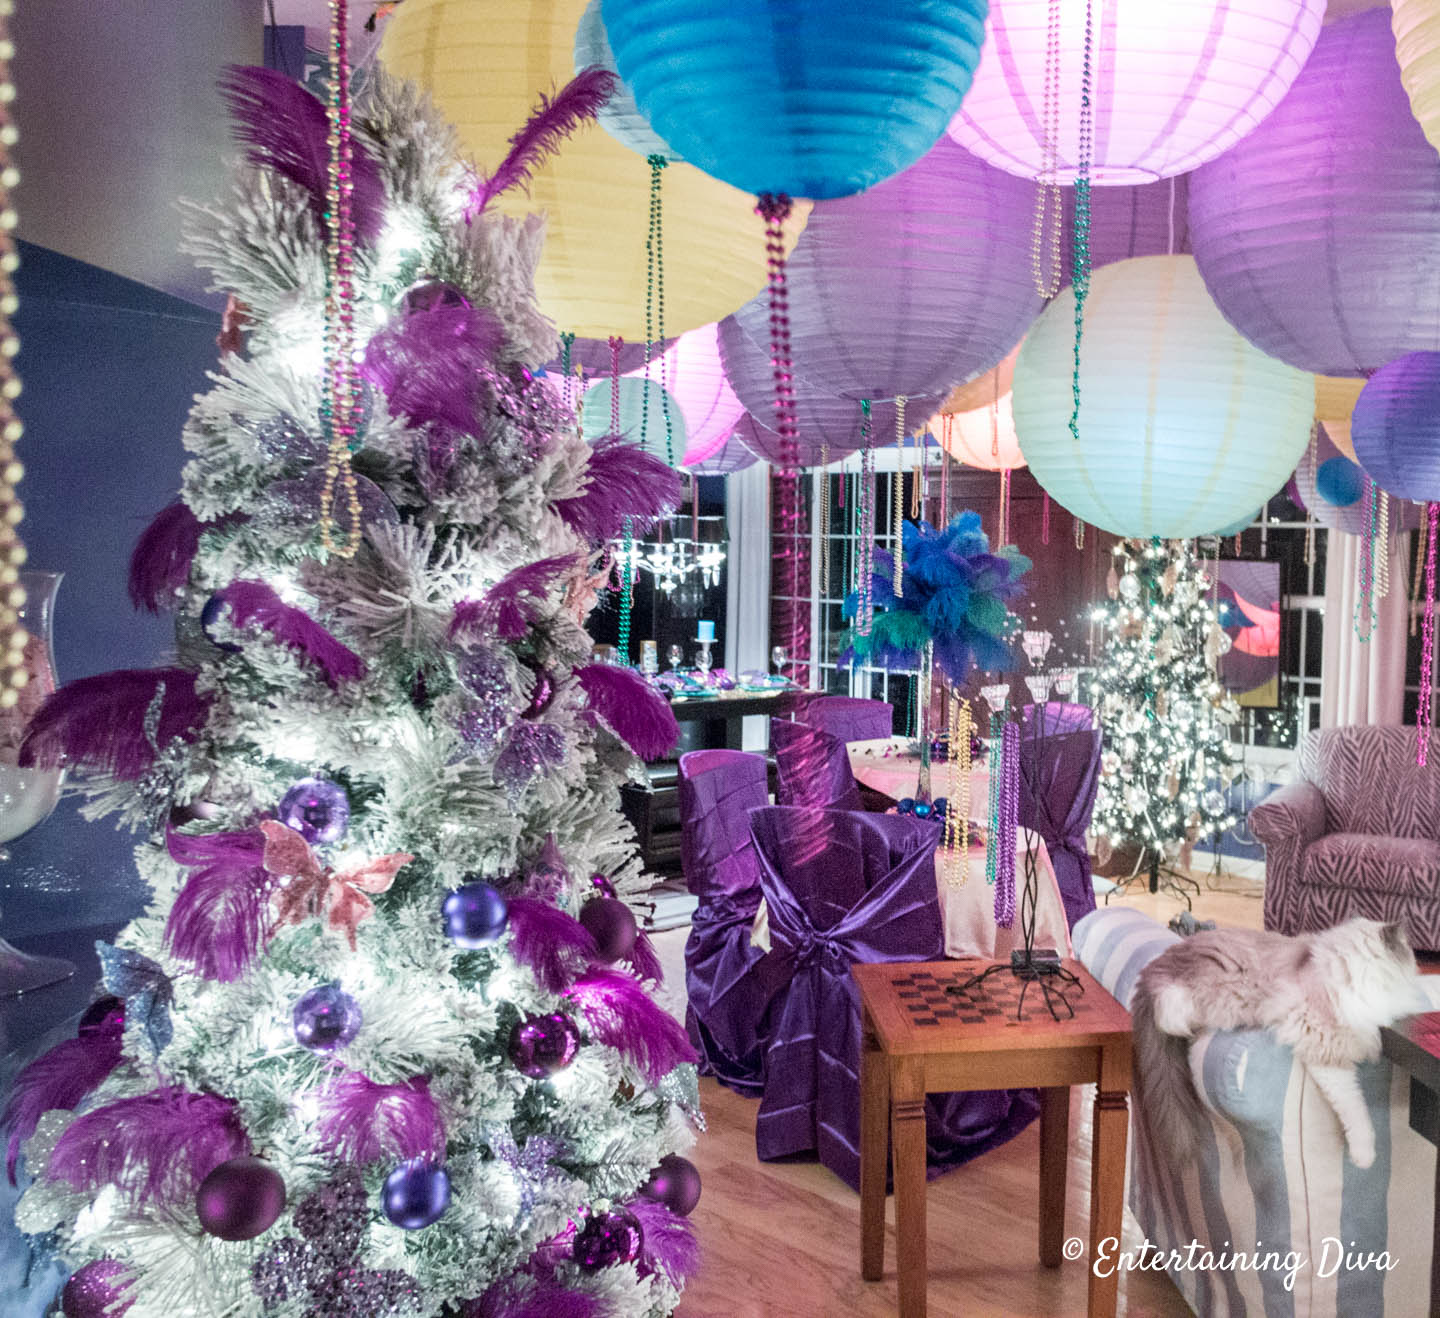 Mardi Gras Christmas tree decorations with purple feathers